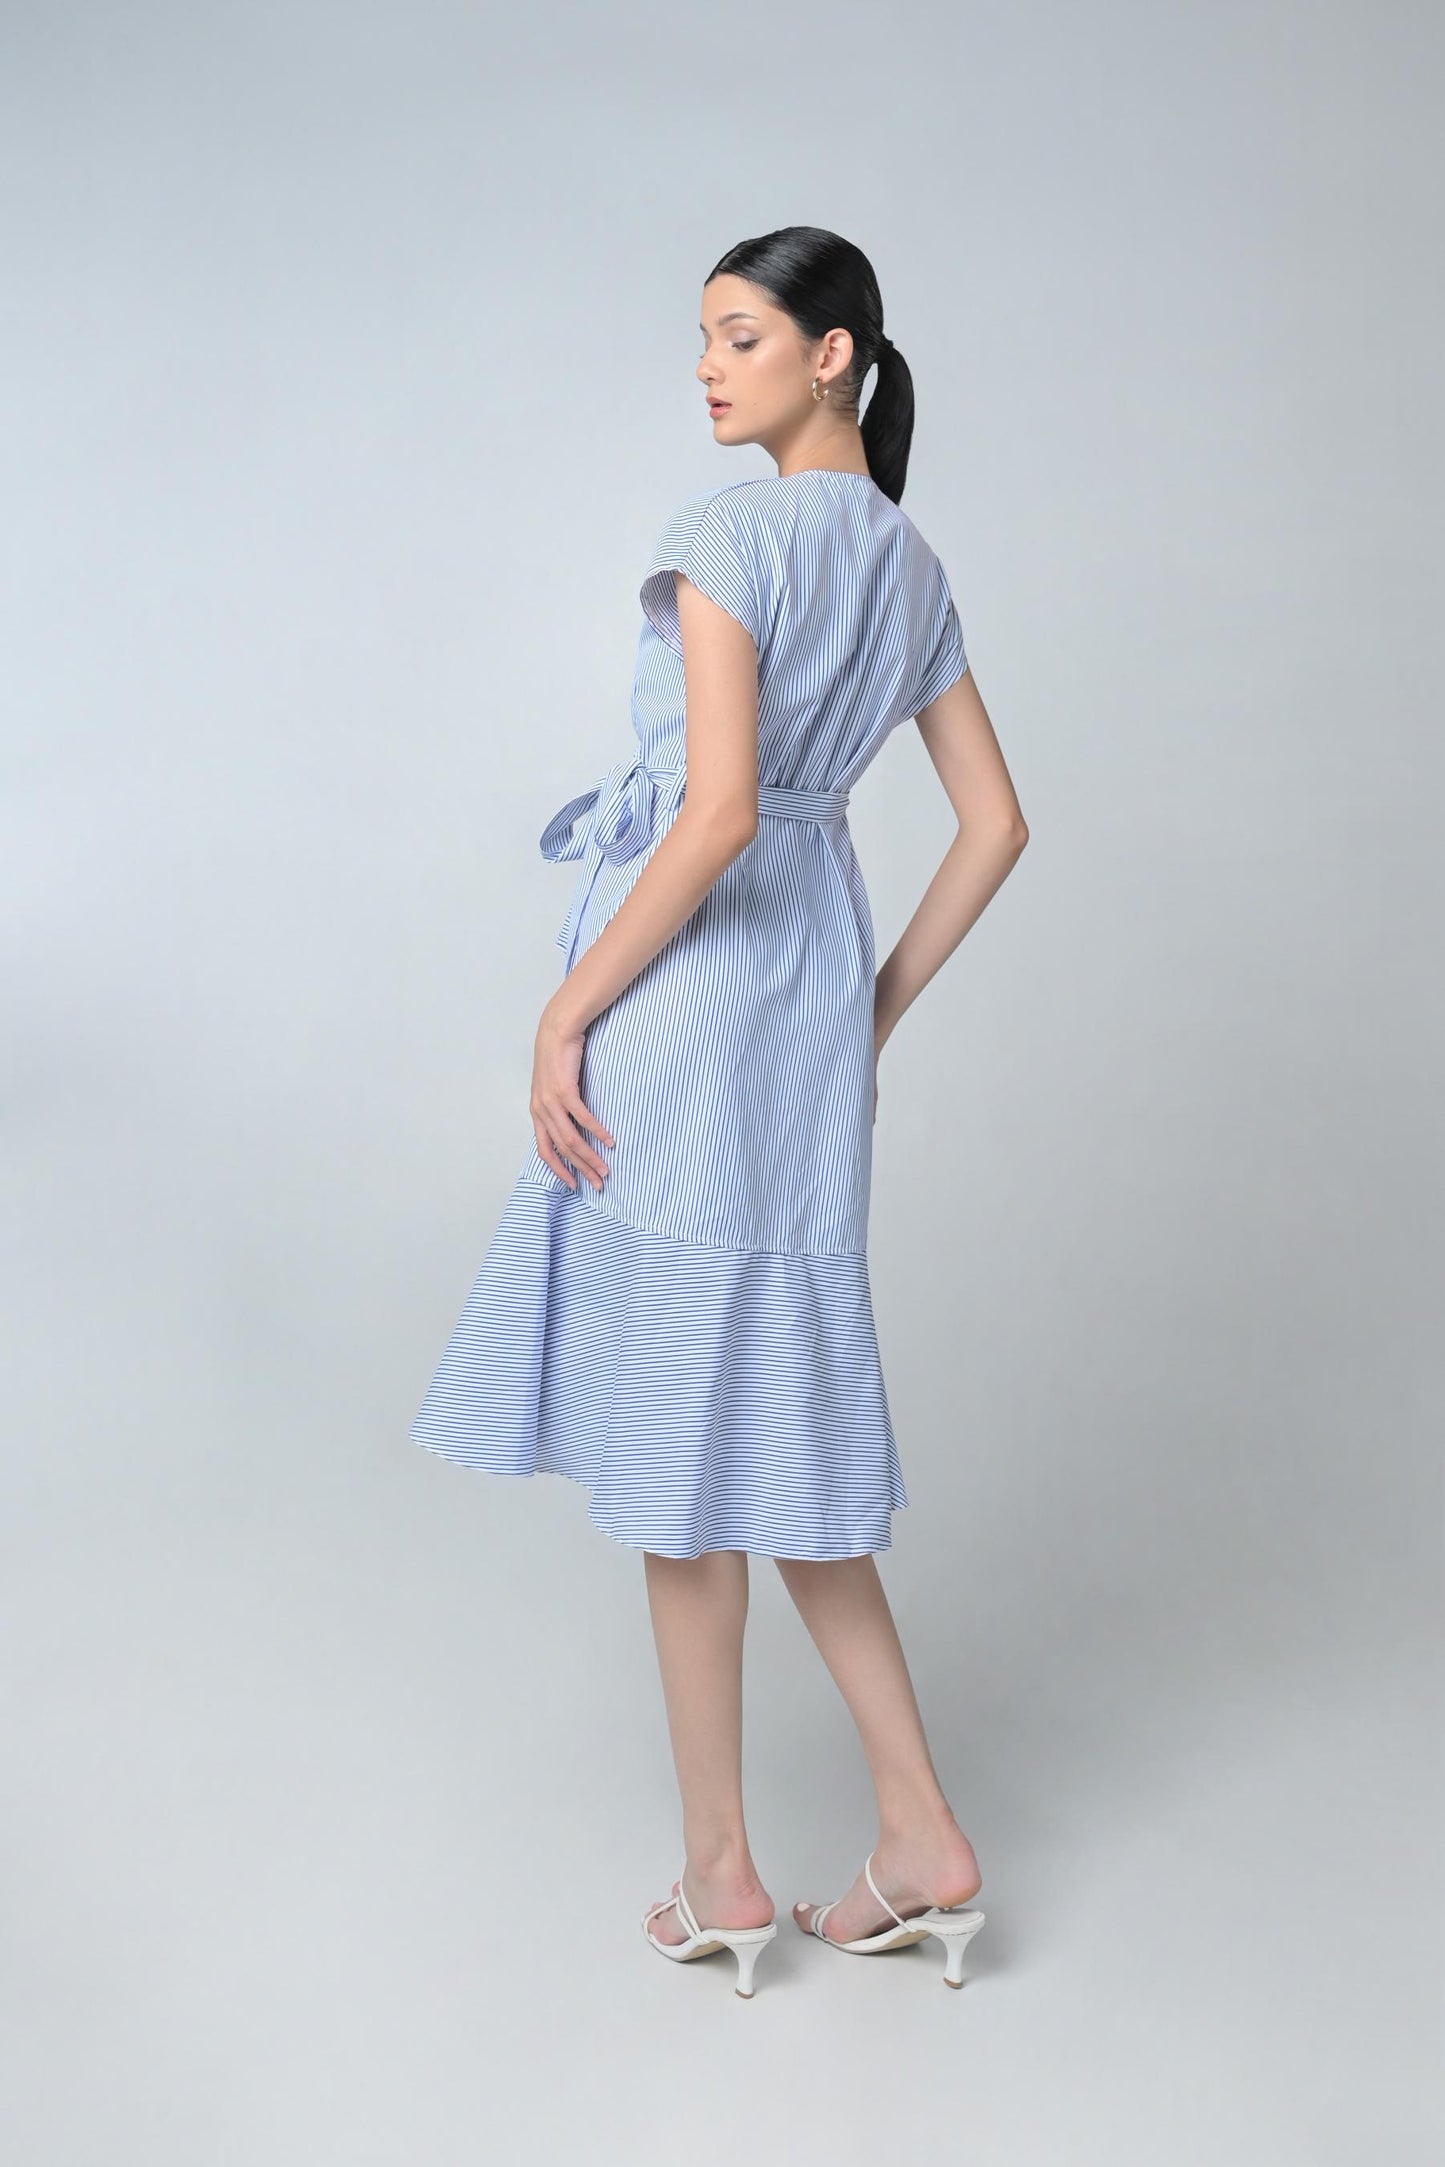 Betsie Short Sleeve Dress Wrap  (Blue/White)